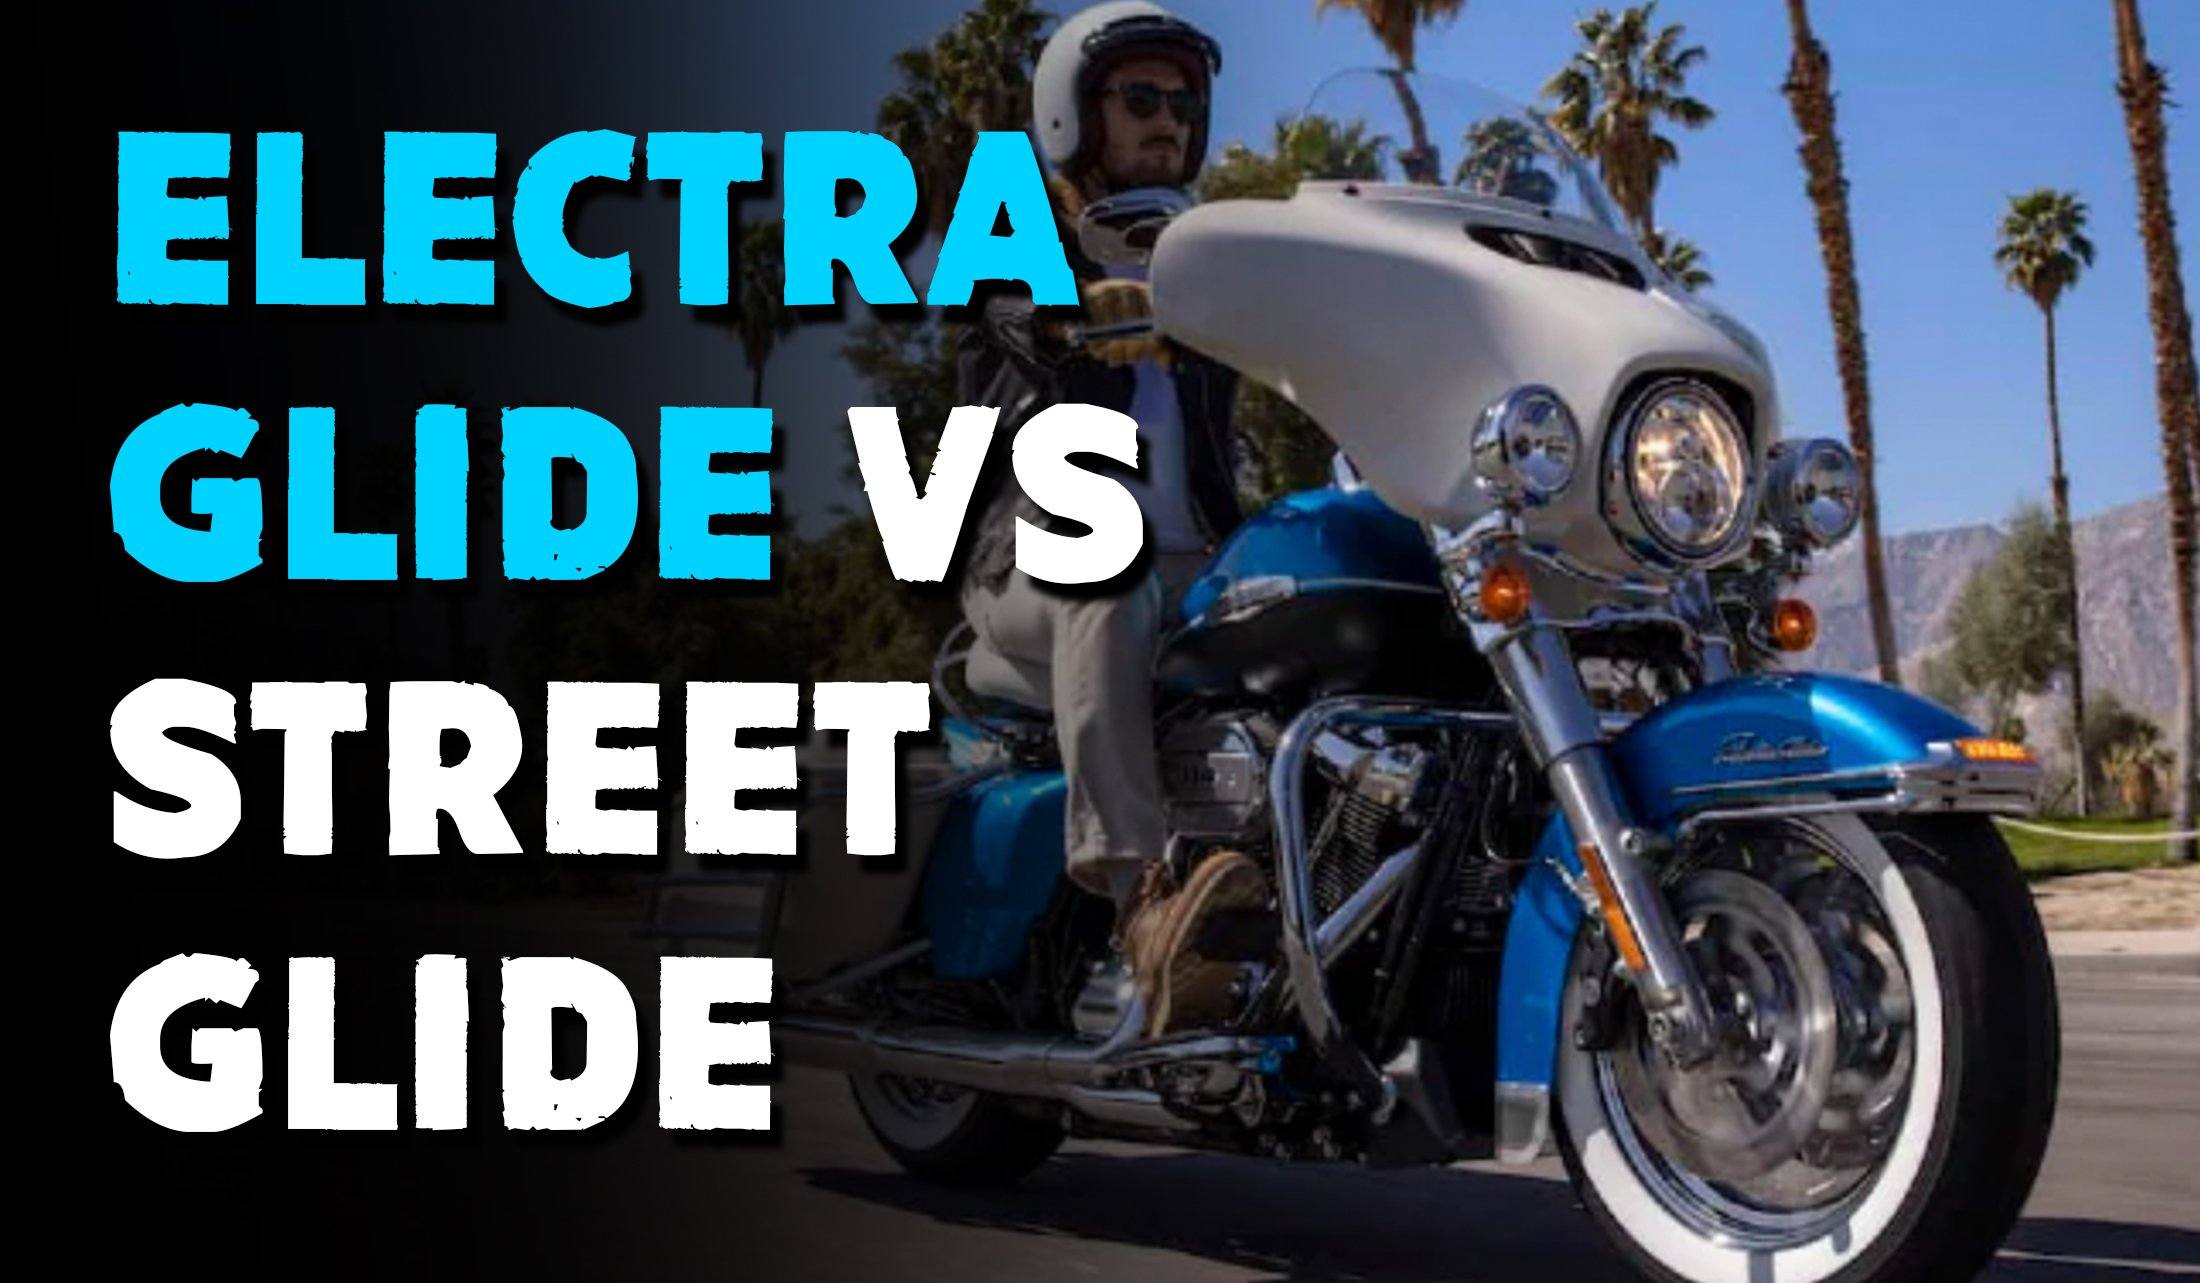 Electra Glide Vs Street Glide: Ultimate Showdown